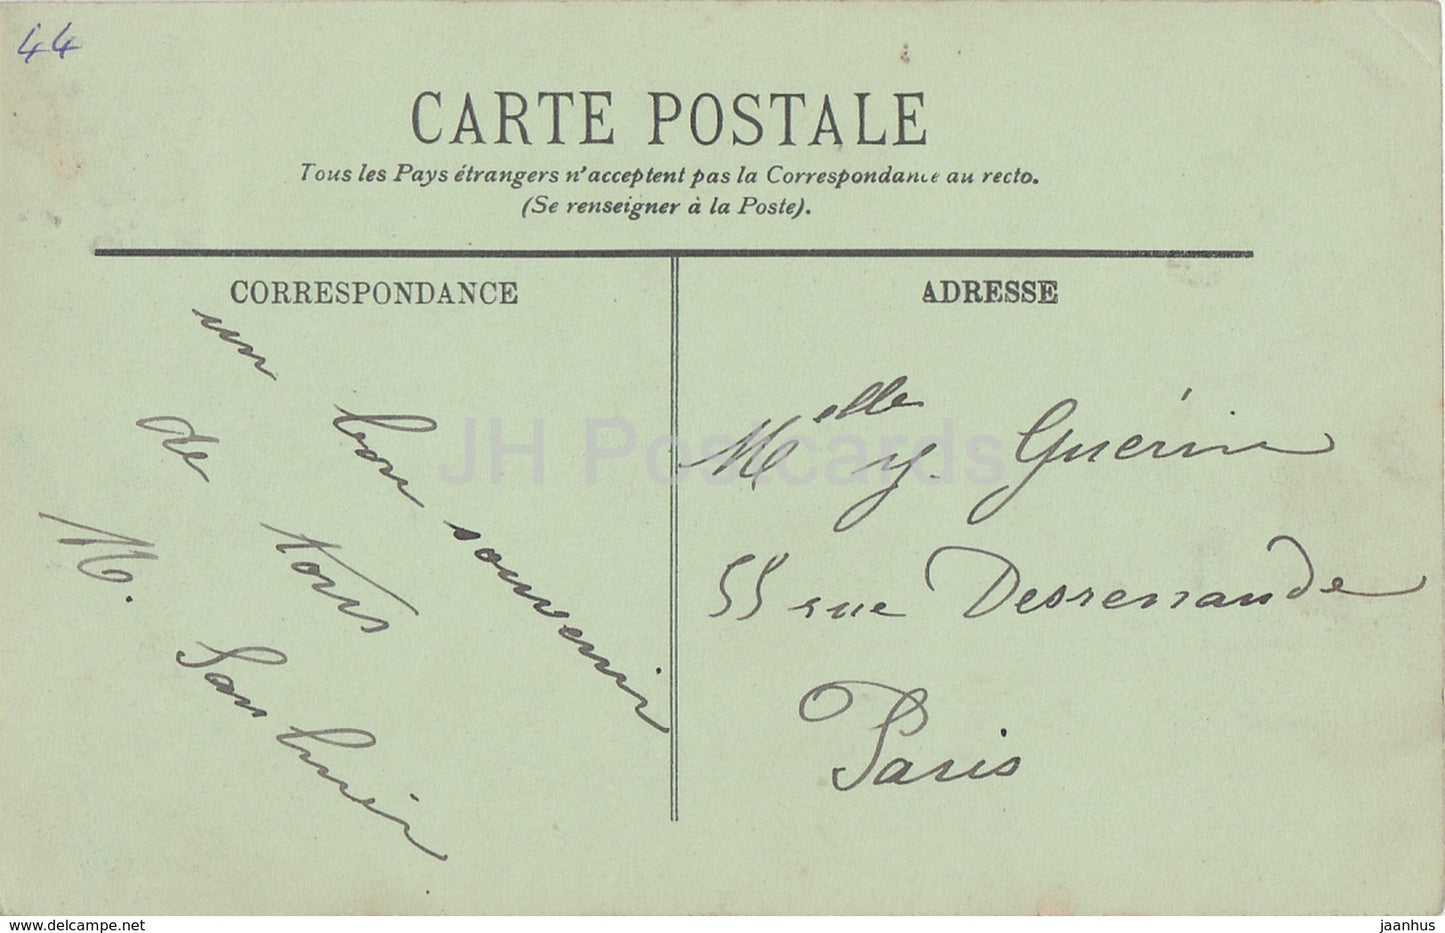 Pornic - Le Château - vu de la Terrasse - château - 17 - carte postale ancienne - France - occasion